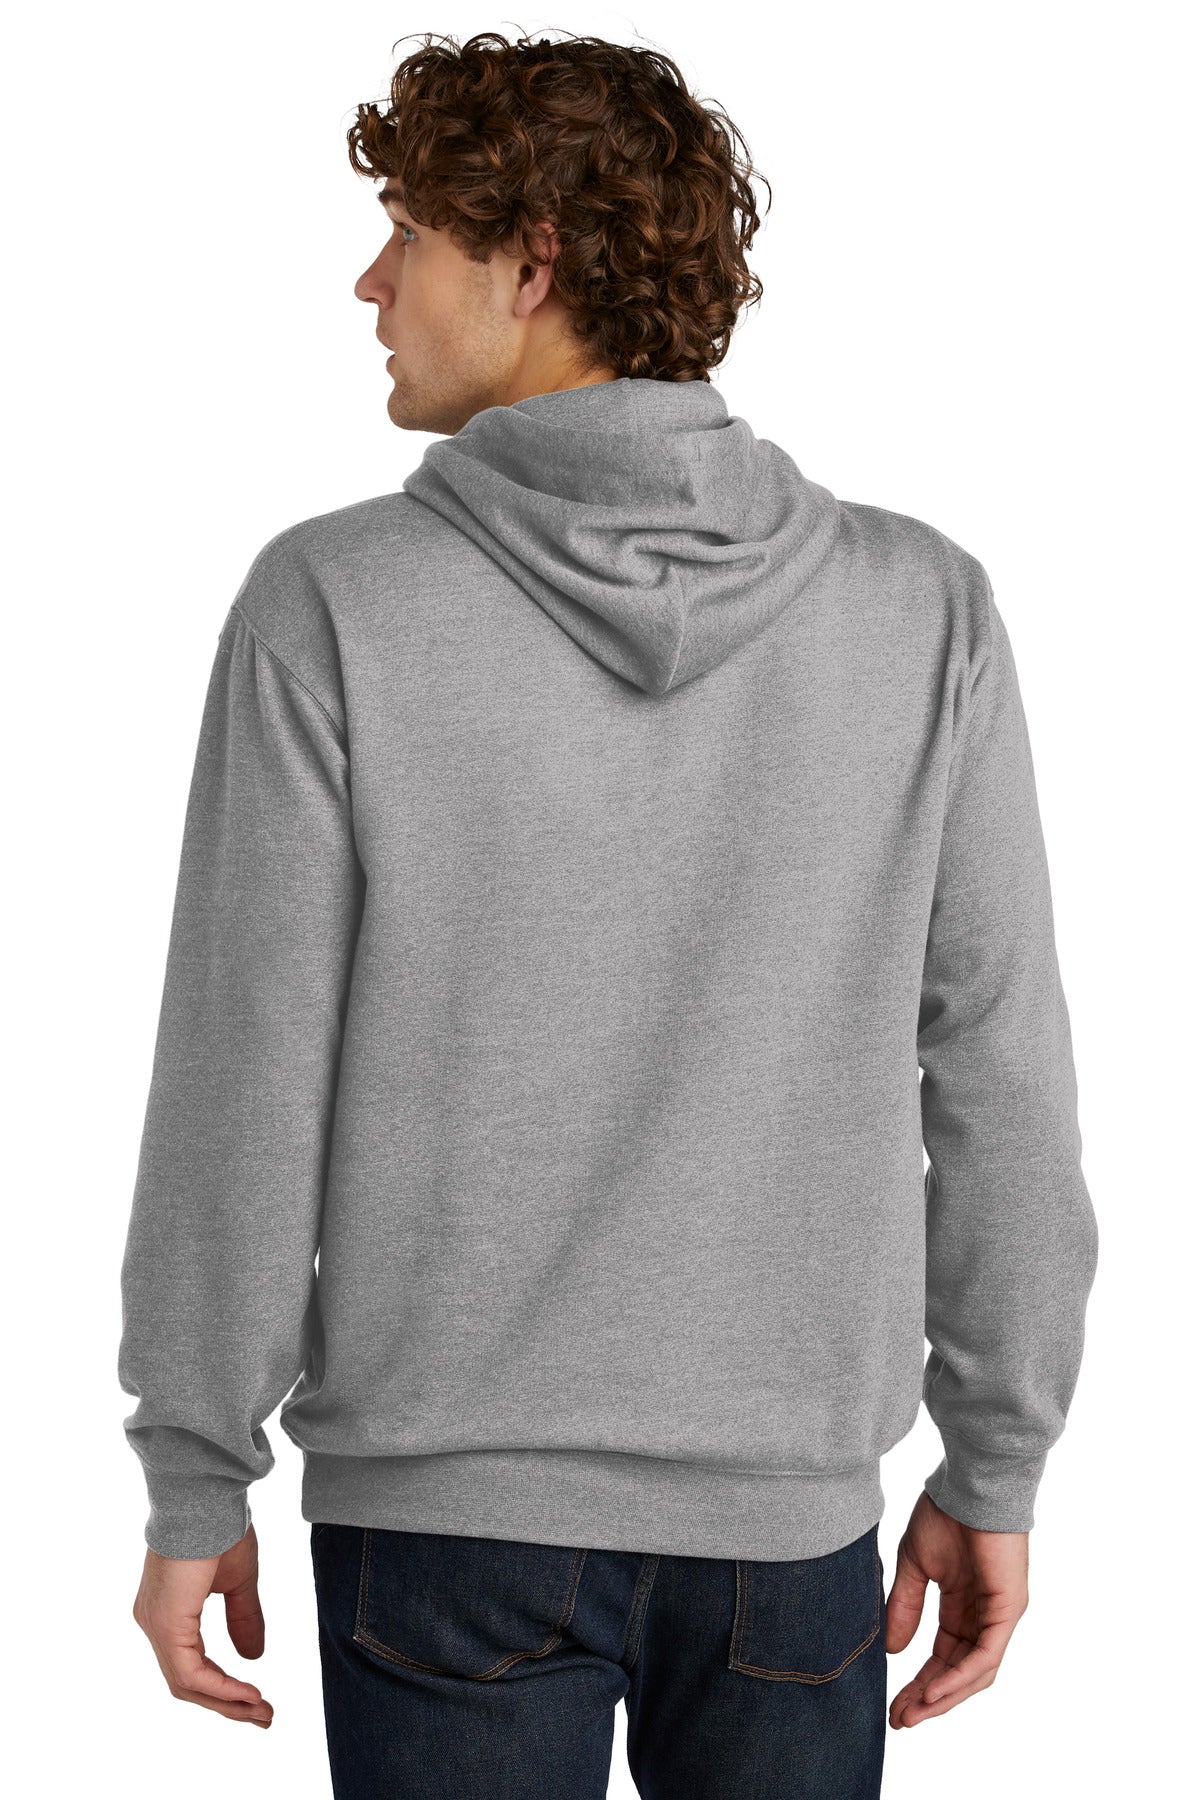 Port & Company® Fleece Pullover Hooded Sweatshirt PC79H - DFW Impression